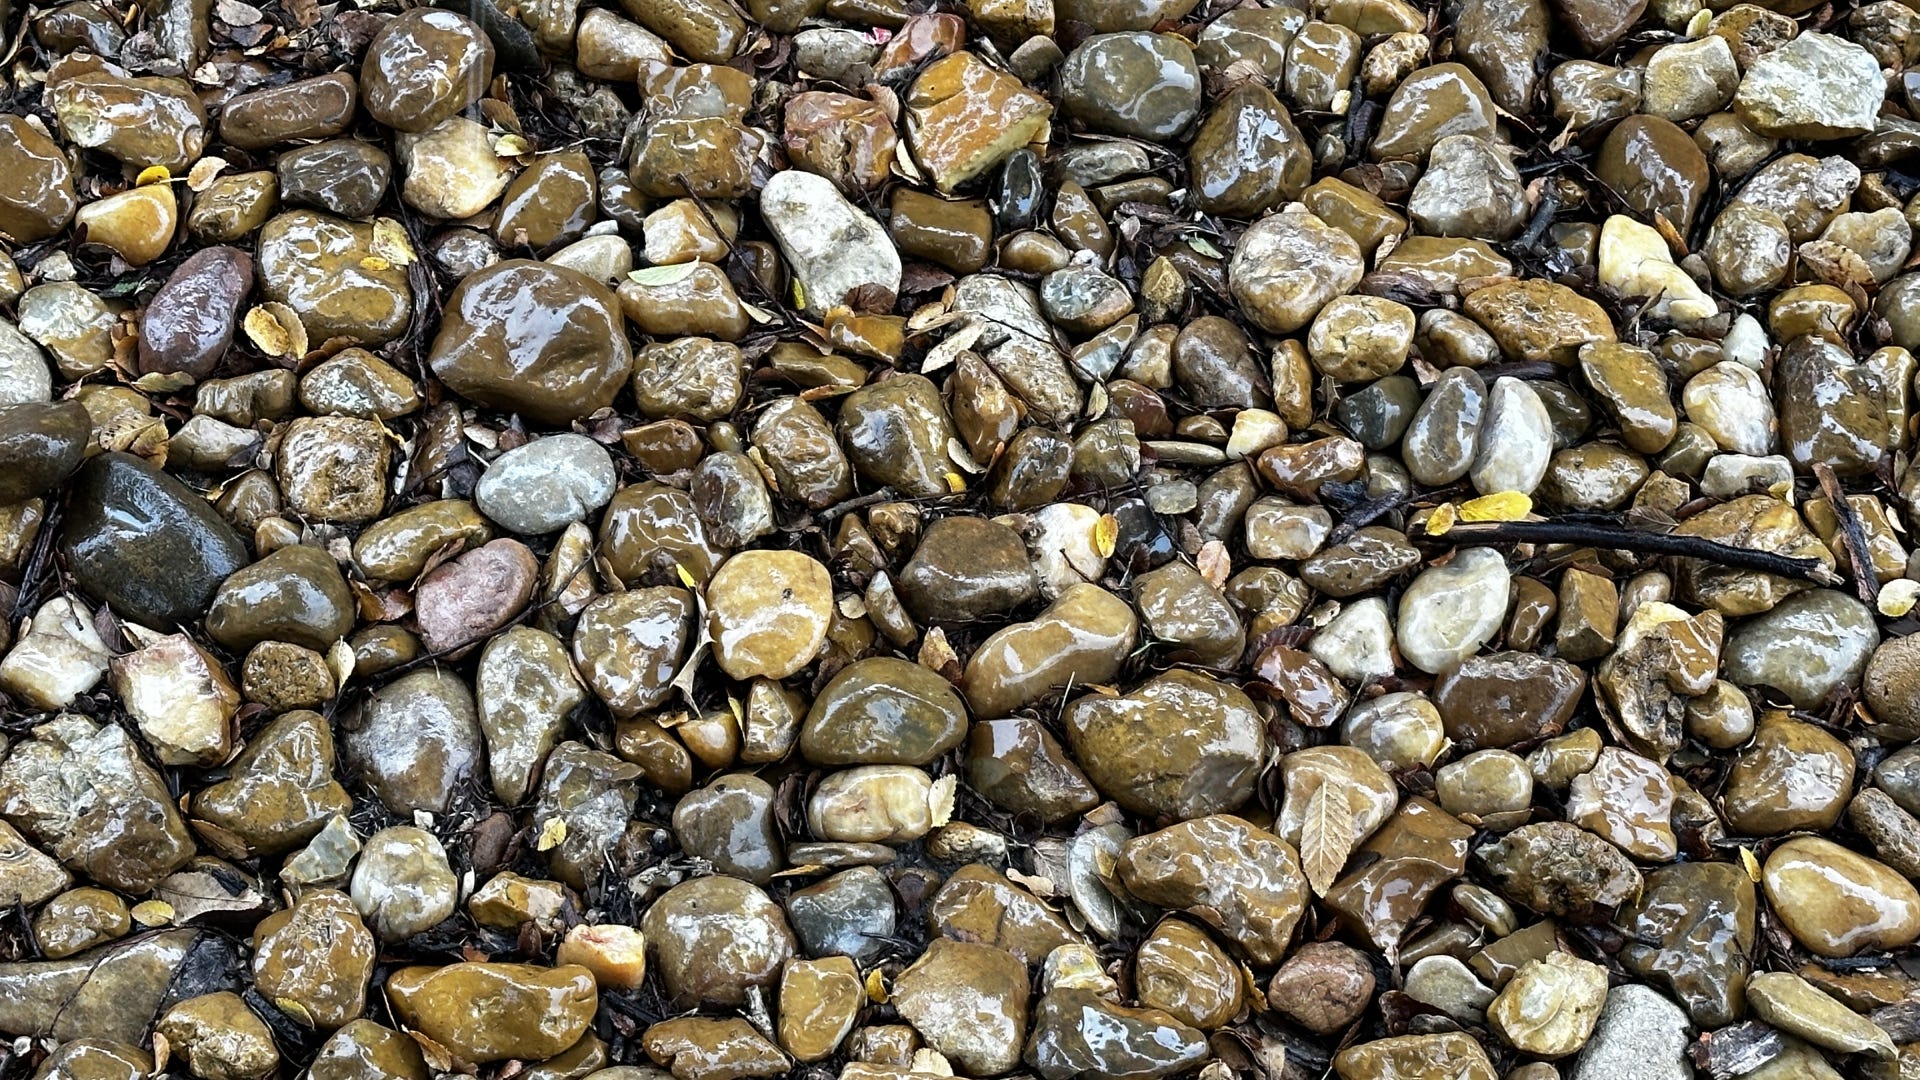 Freshly rained-on rocks